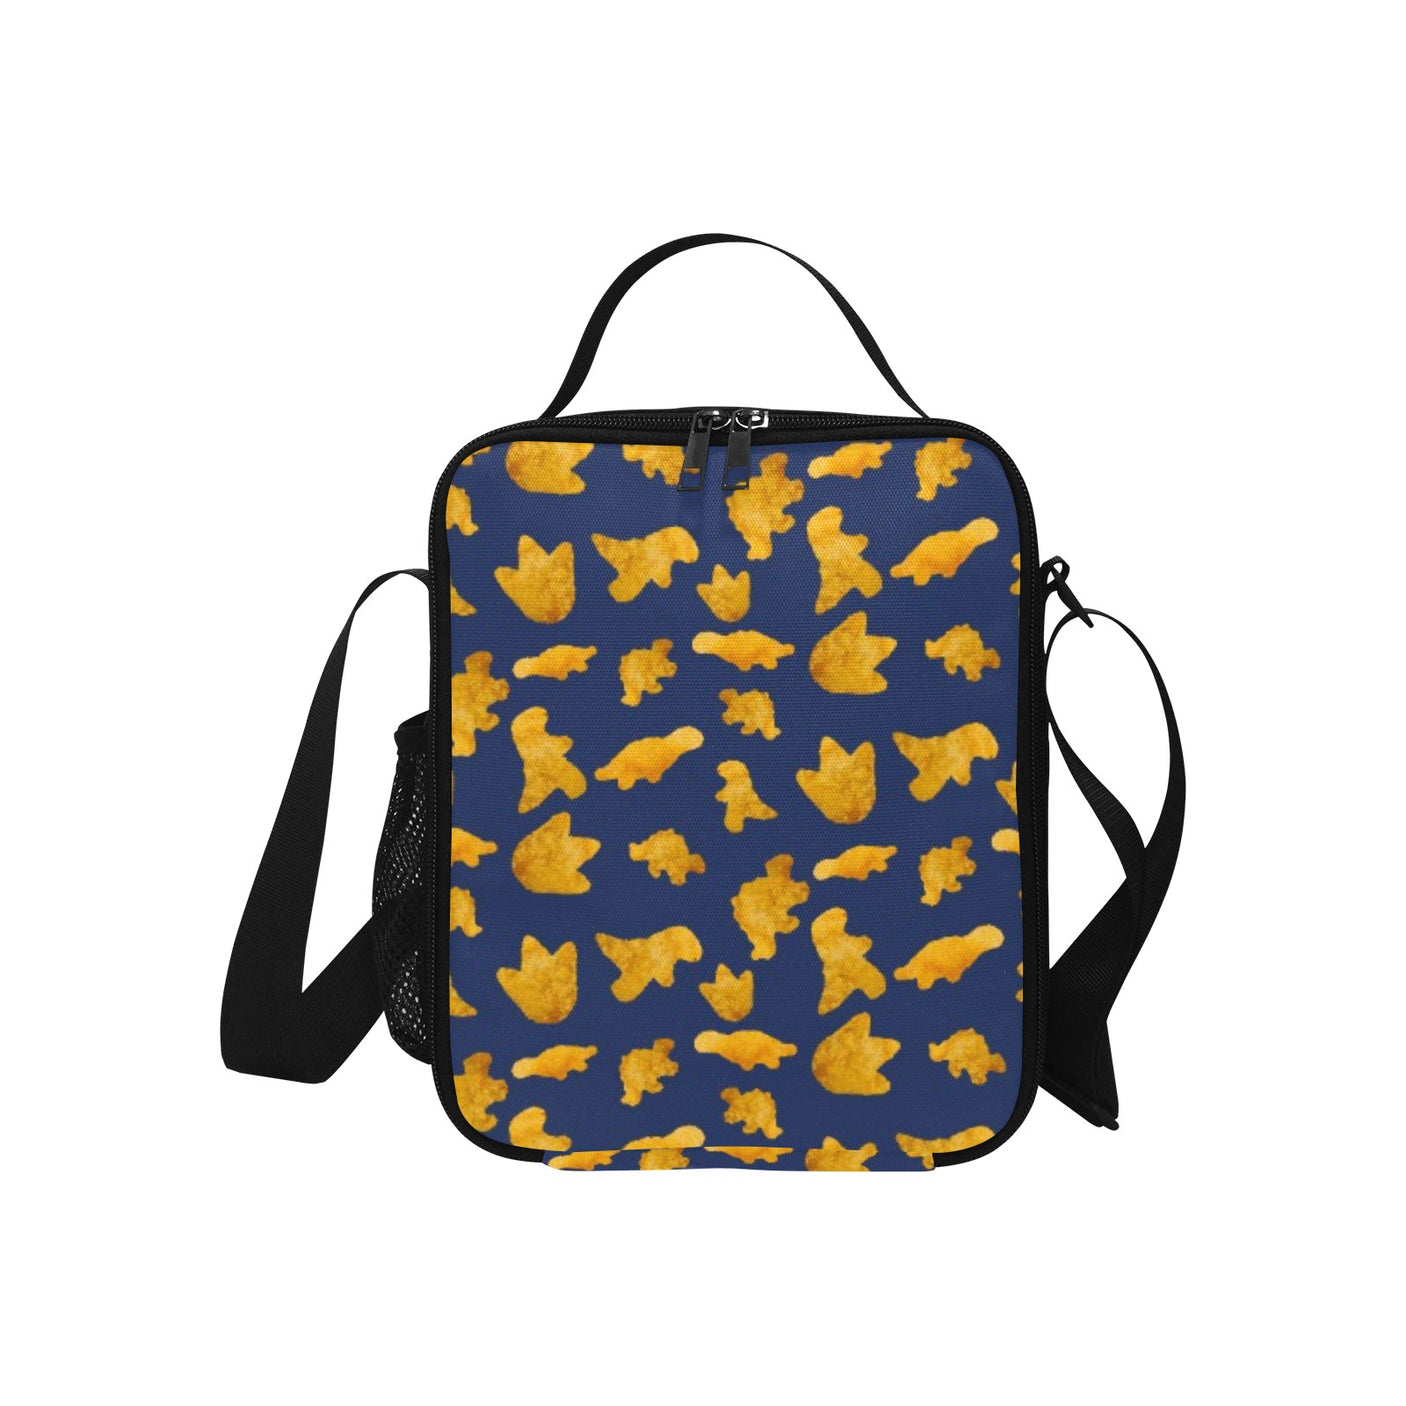 Dinosaur Chicken Nuggets Lunch Box Bag